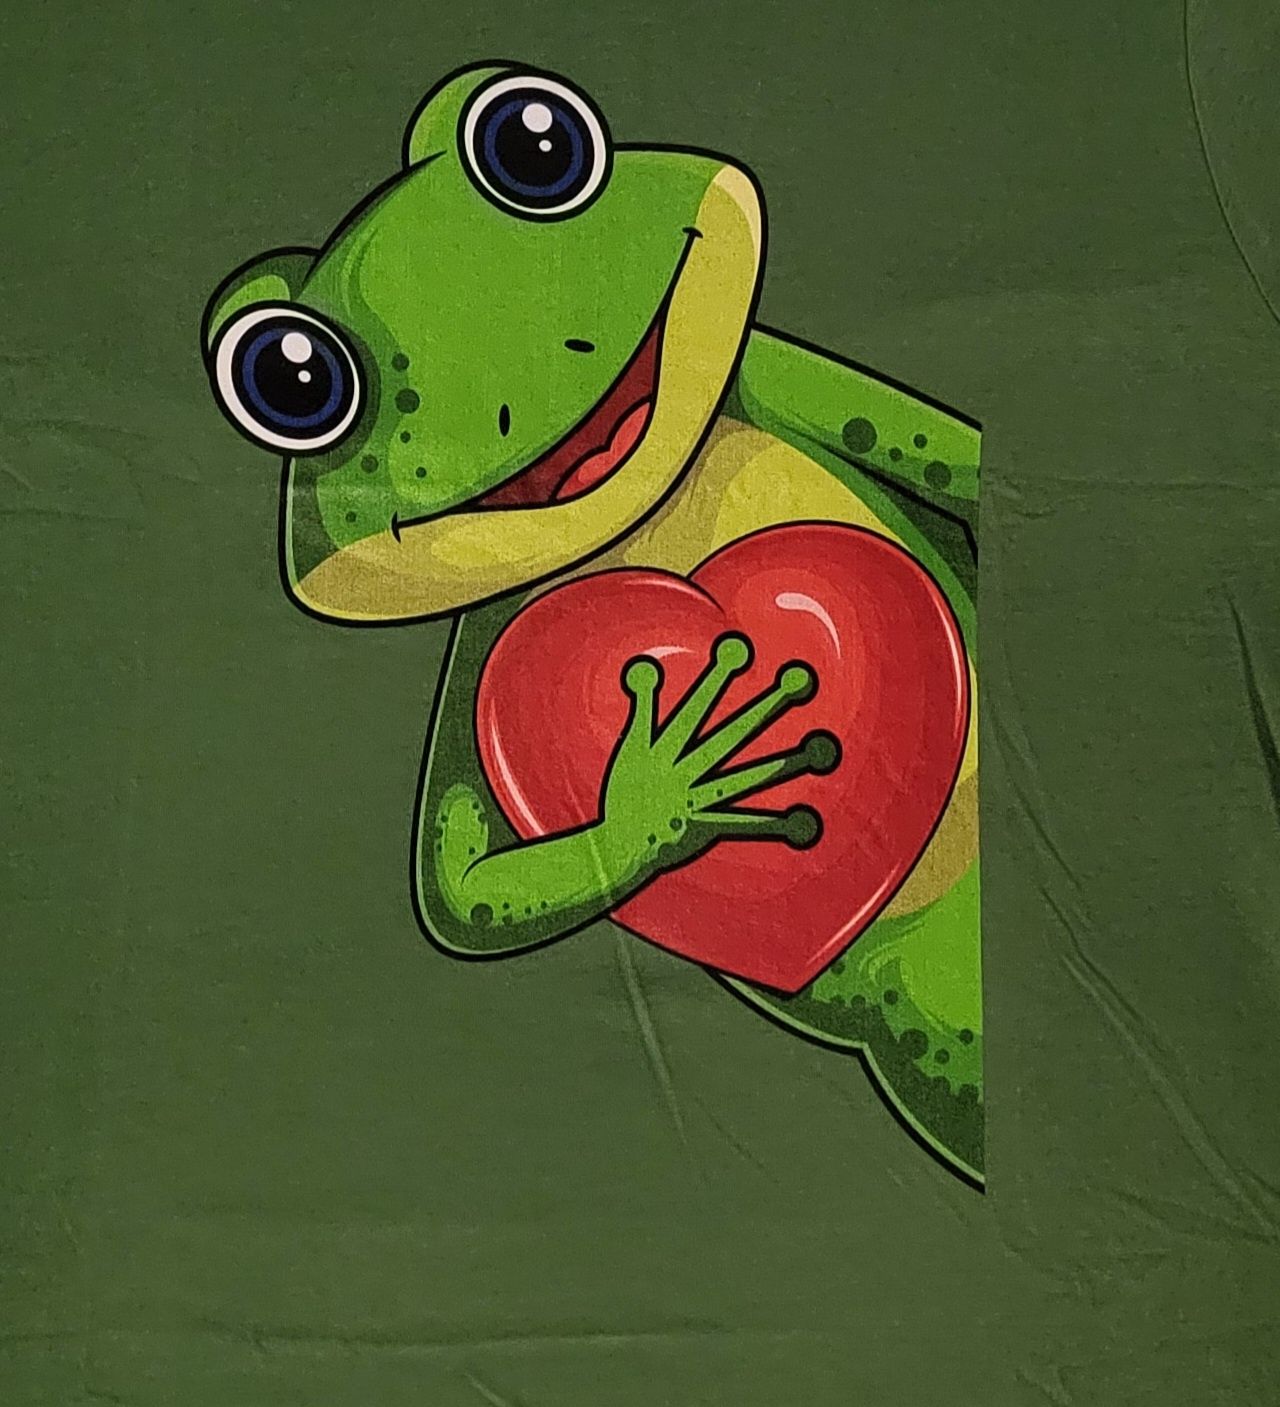 Koszulka tishirt żabka rozmiar M